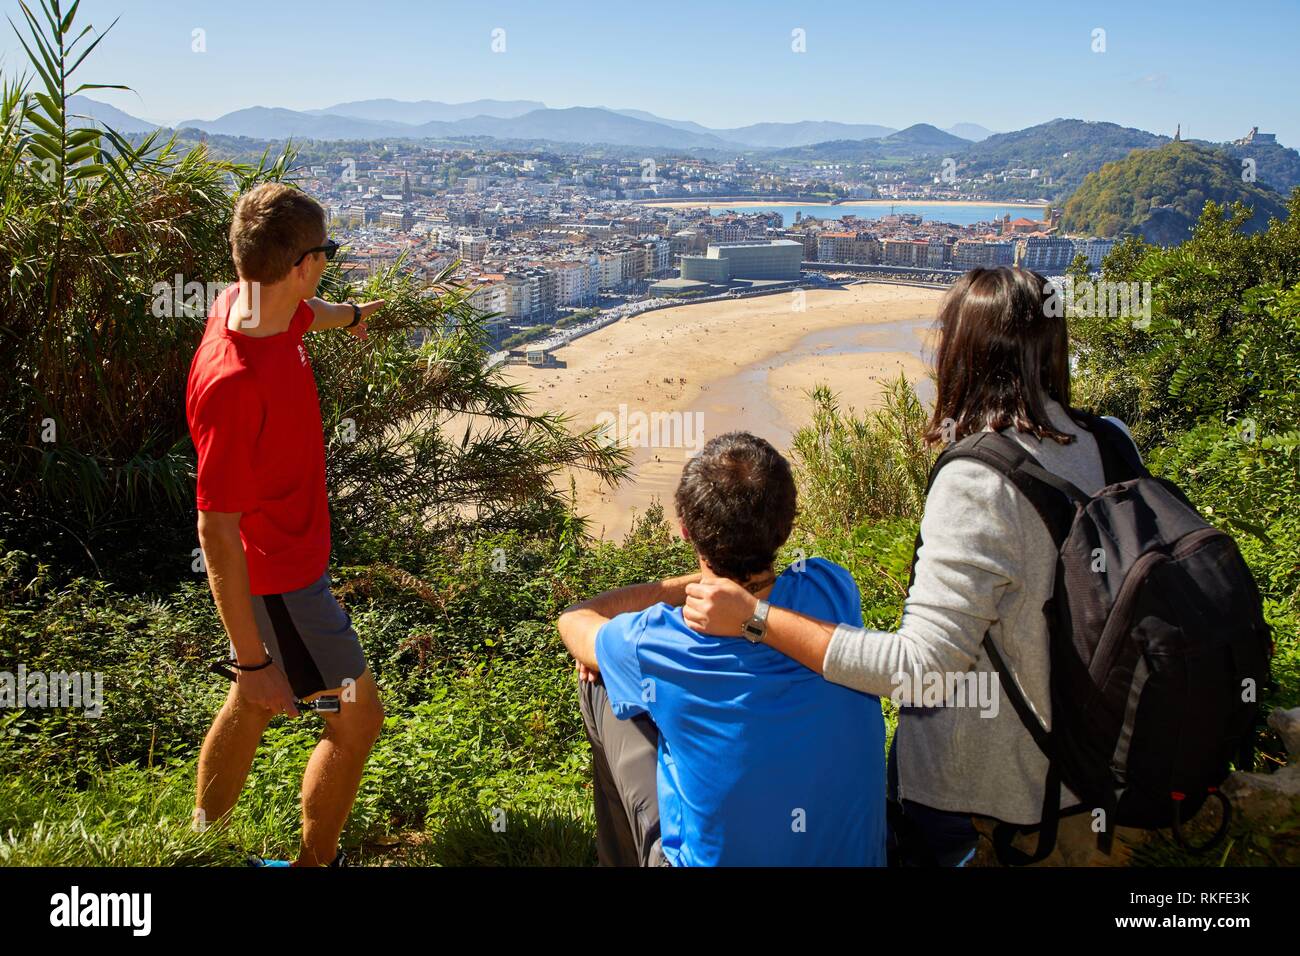 Group of tourists and guide making a tour, Mirador del Monte Ulia, Donostia, San Sebastian, Gipuzkoa, Basque Country, Spain, Europe Stock Photo